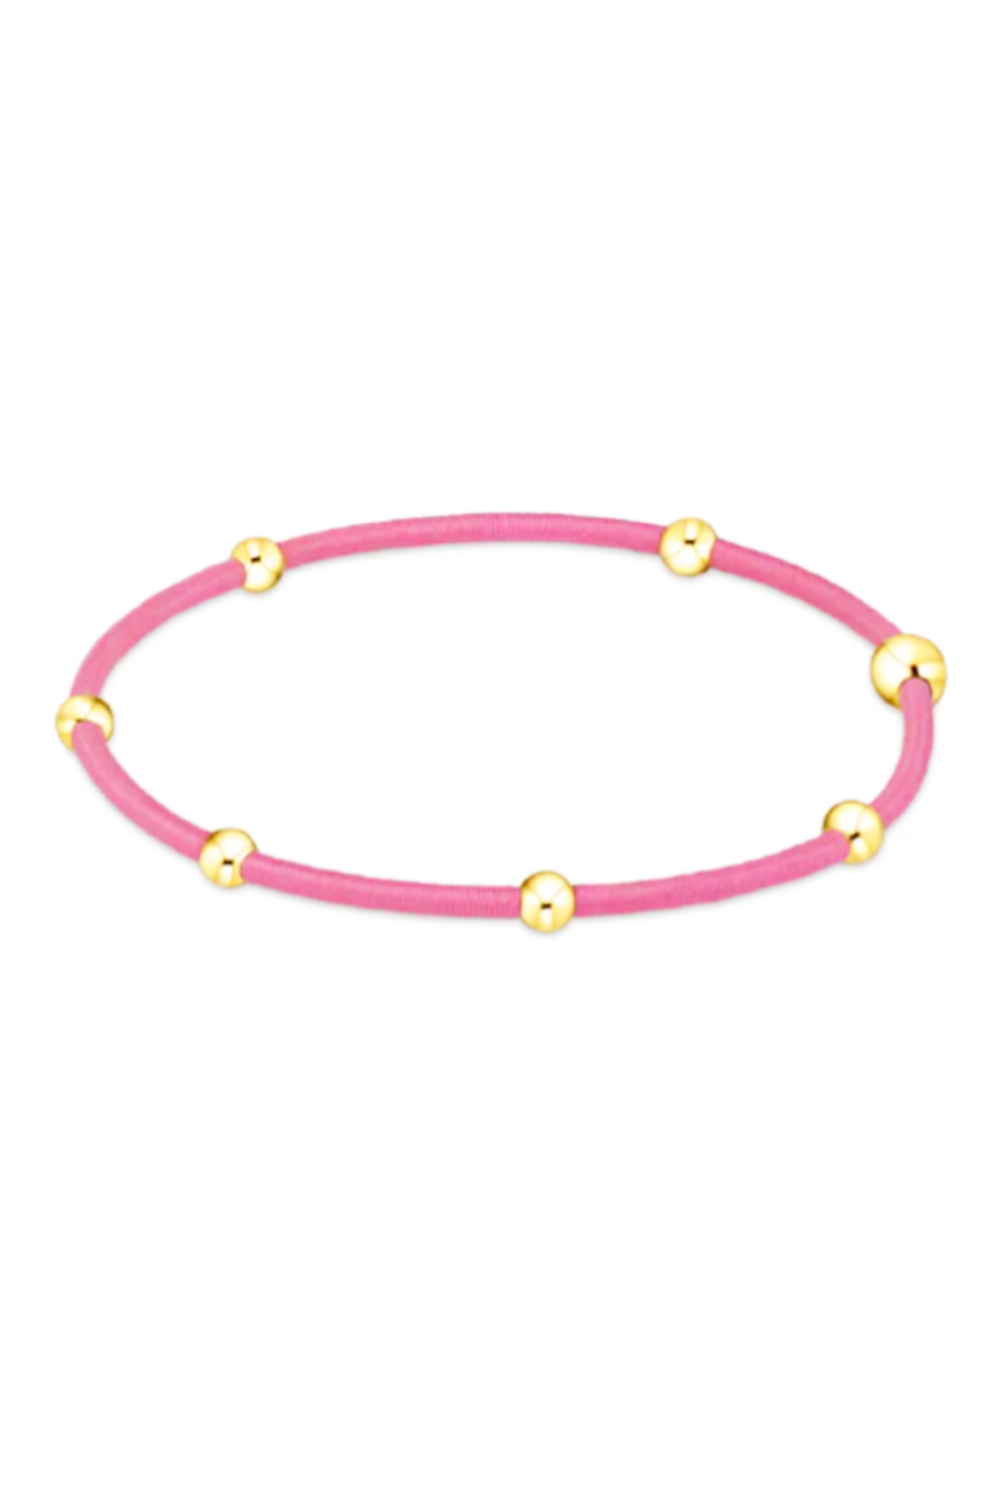 EN Essentials Bracelet - Bright Pink